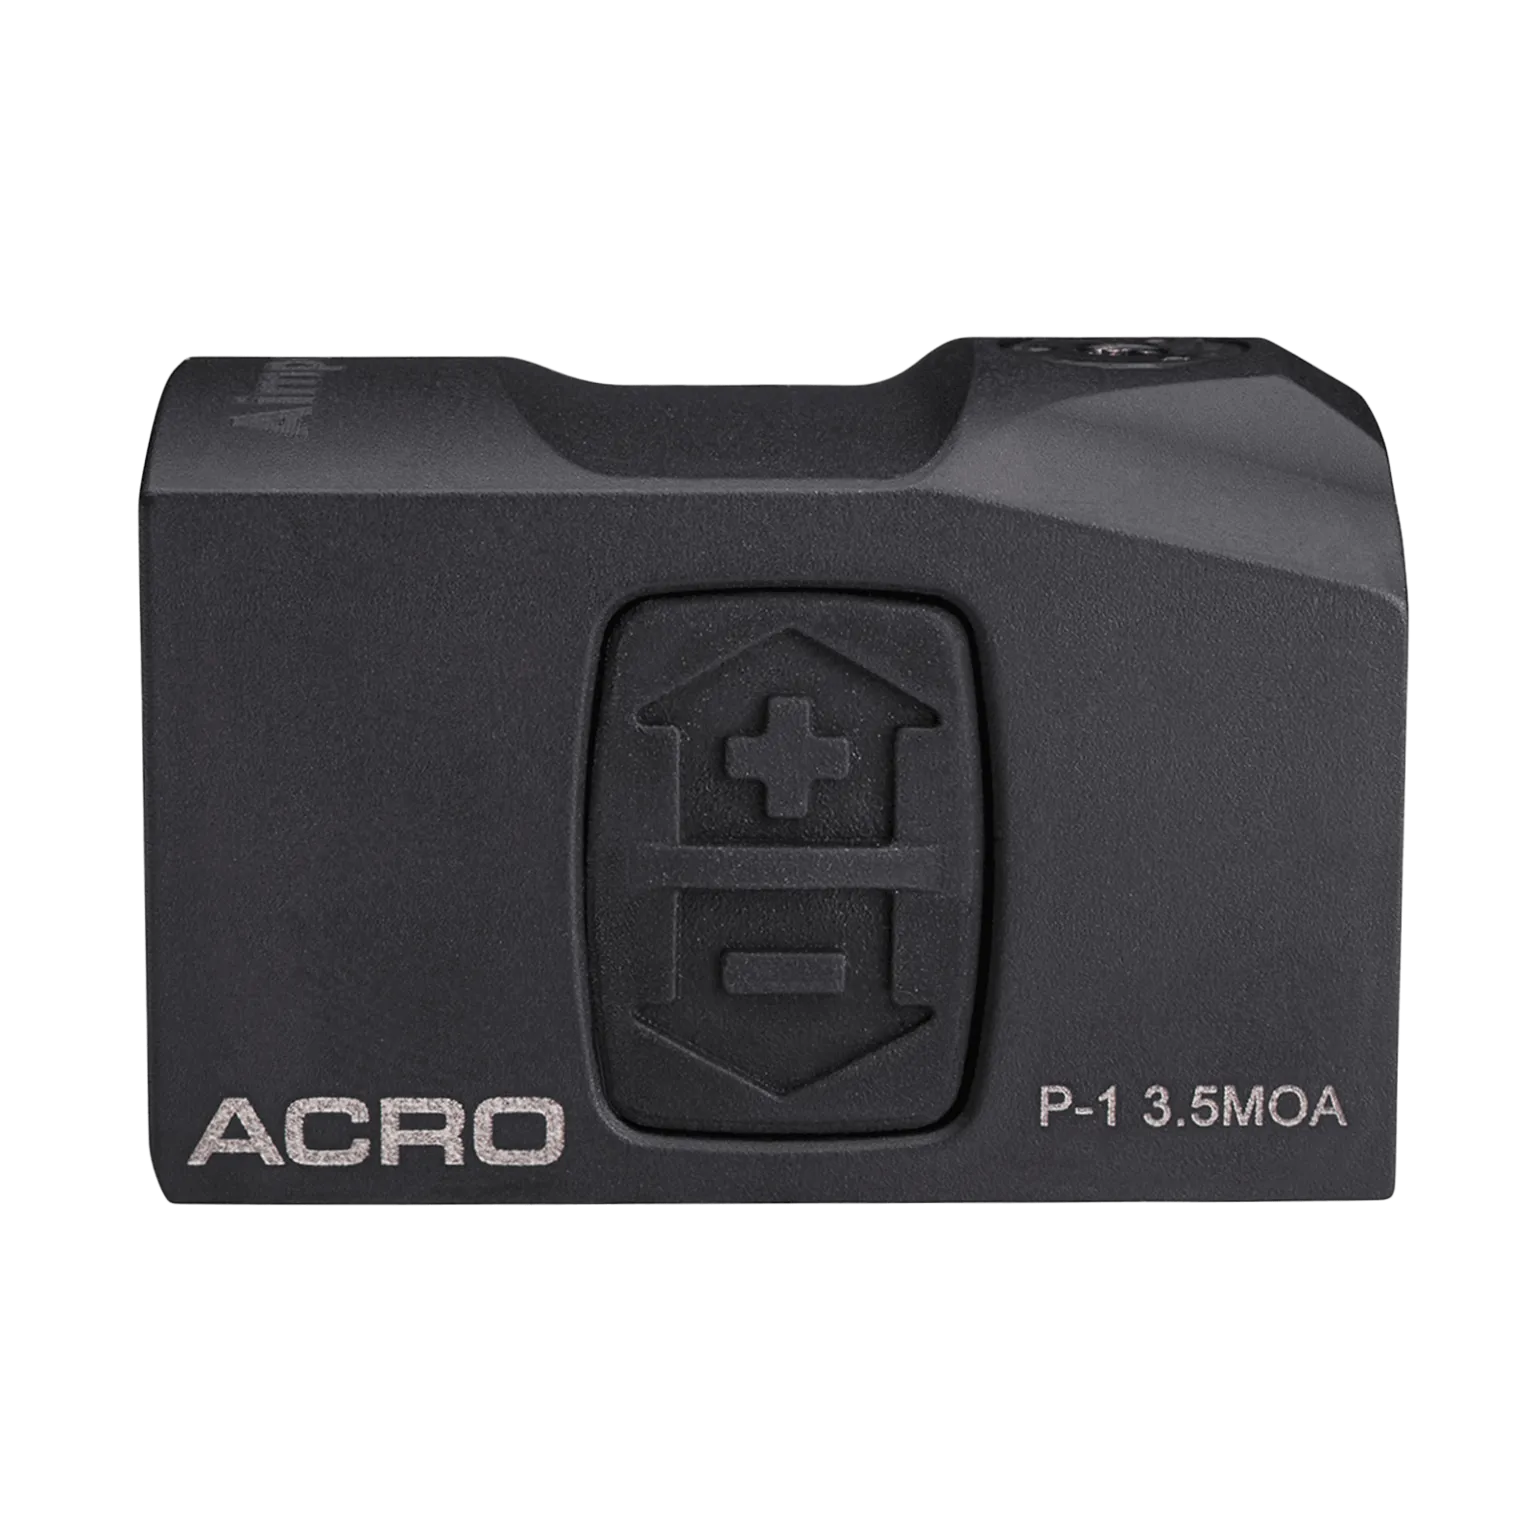 Acro P-1™ 3.5 MOA - Rotpunktvisier mit integrierter Acro™ Schnittstelle - 2